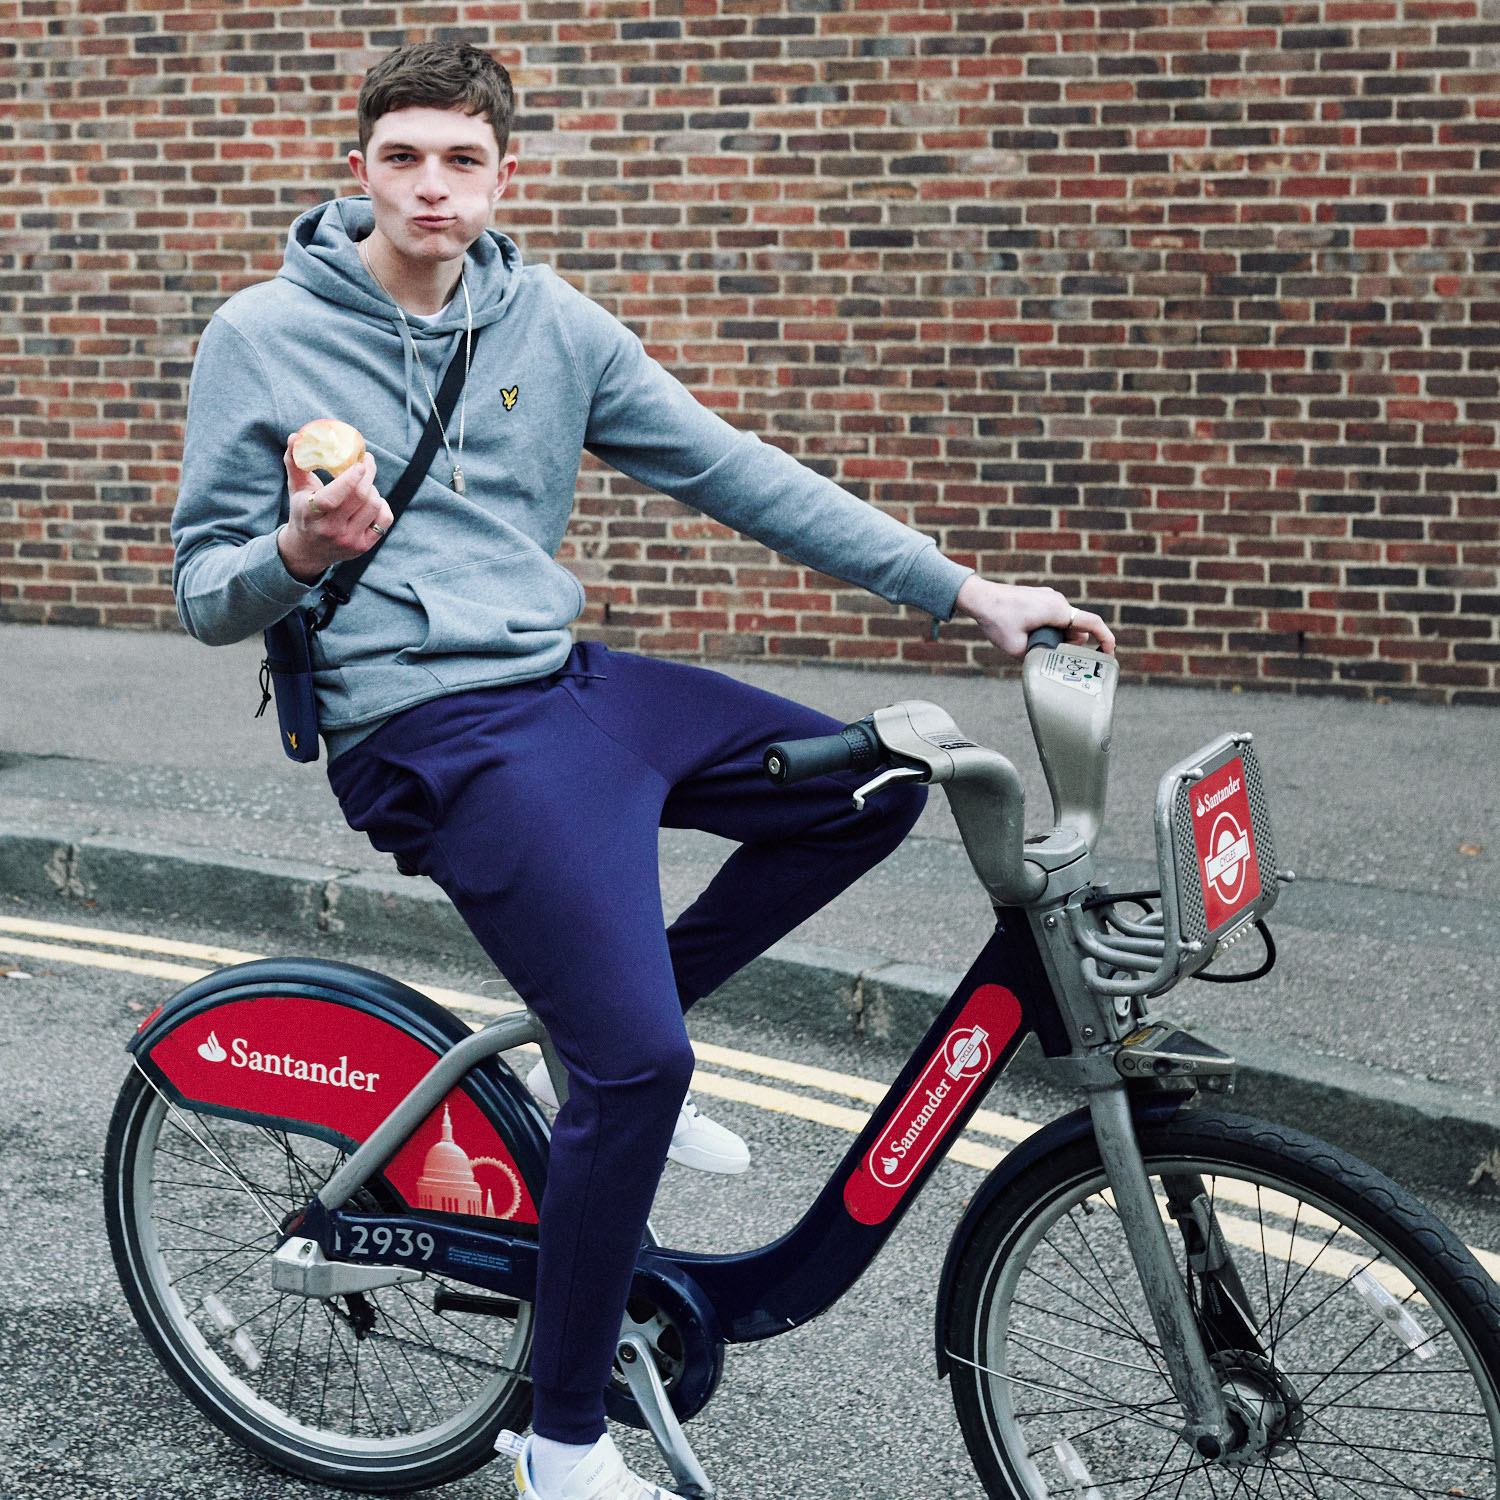 Lad on Boris bike by lifestyle photographer Tim Cole